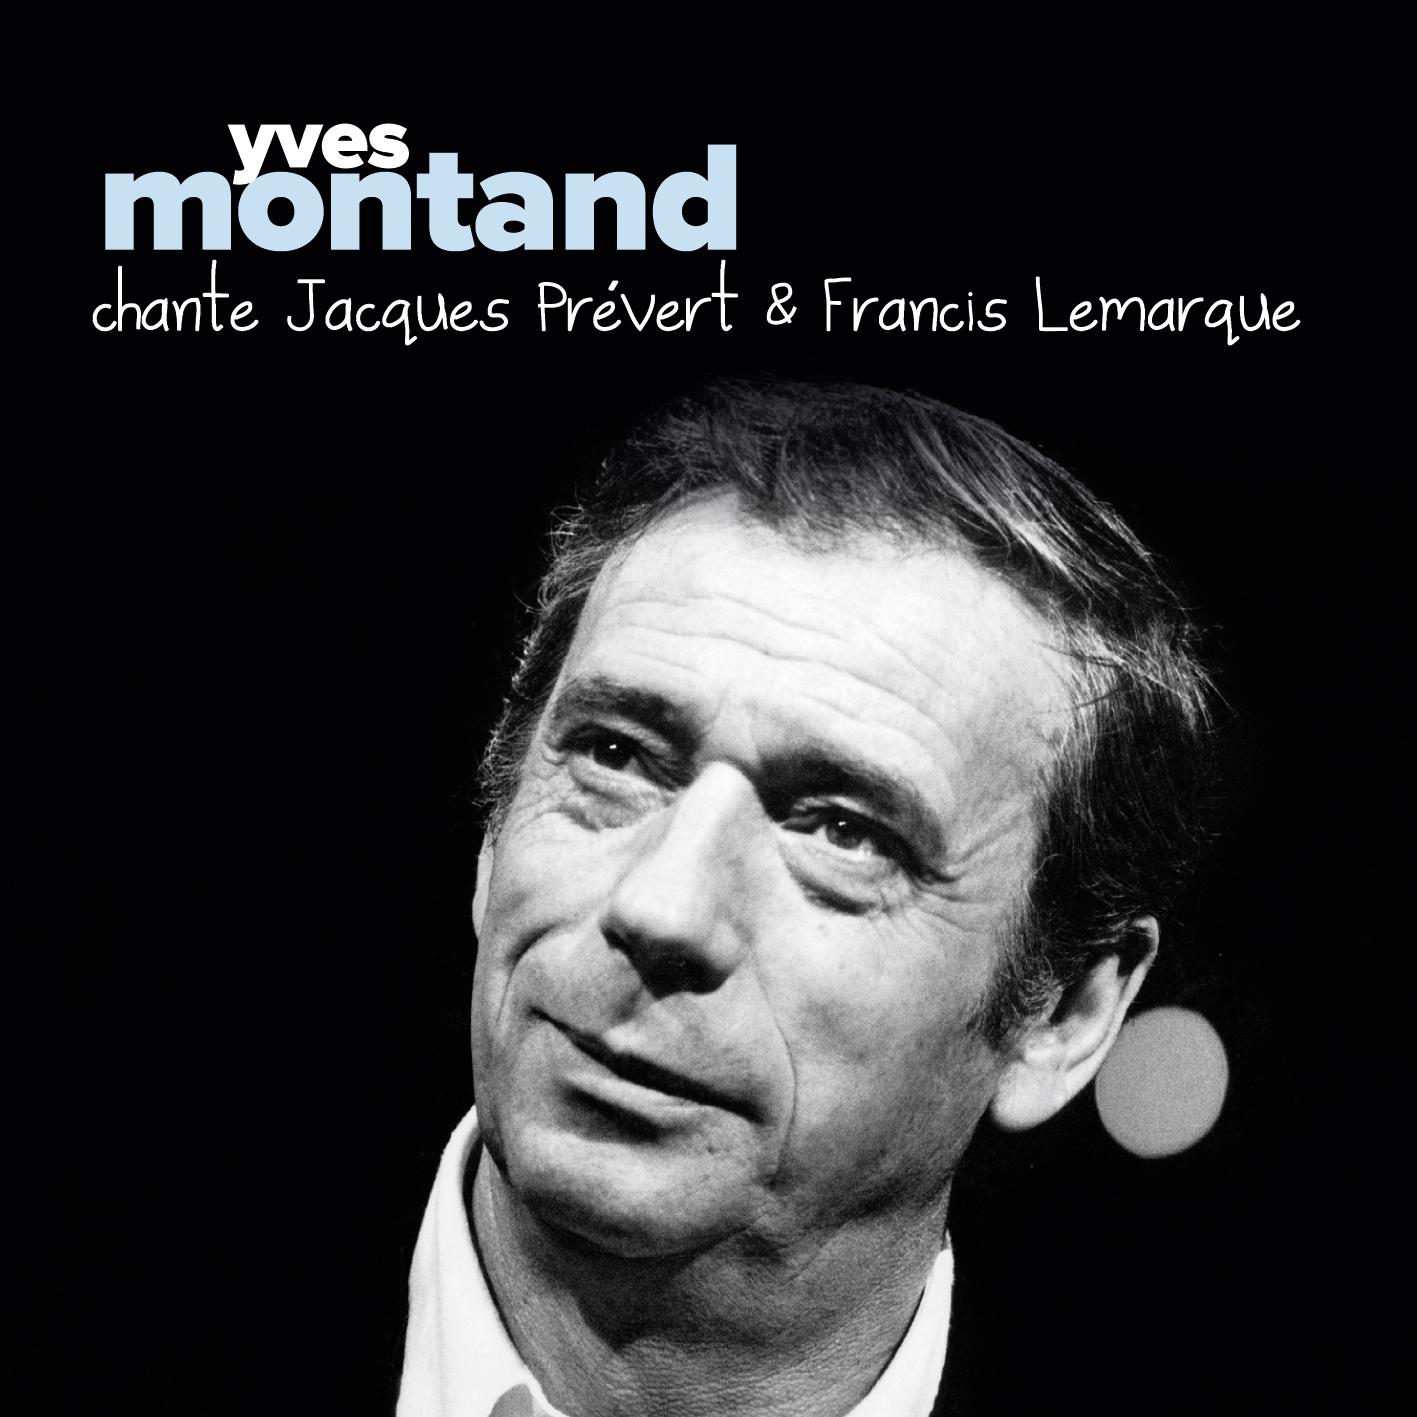 Yves Montand chante Jacques Pre vert  Francis Lemarque